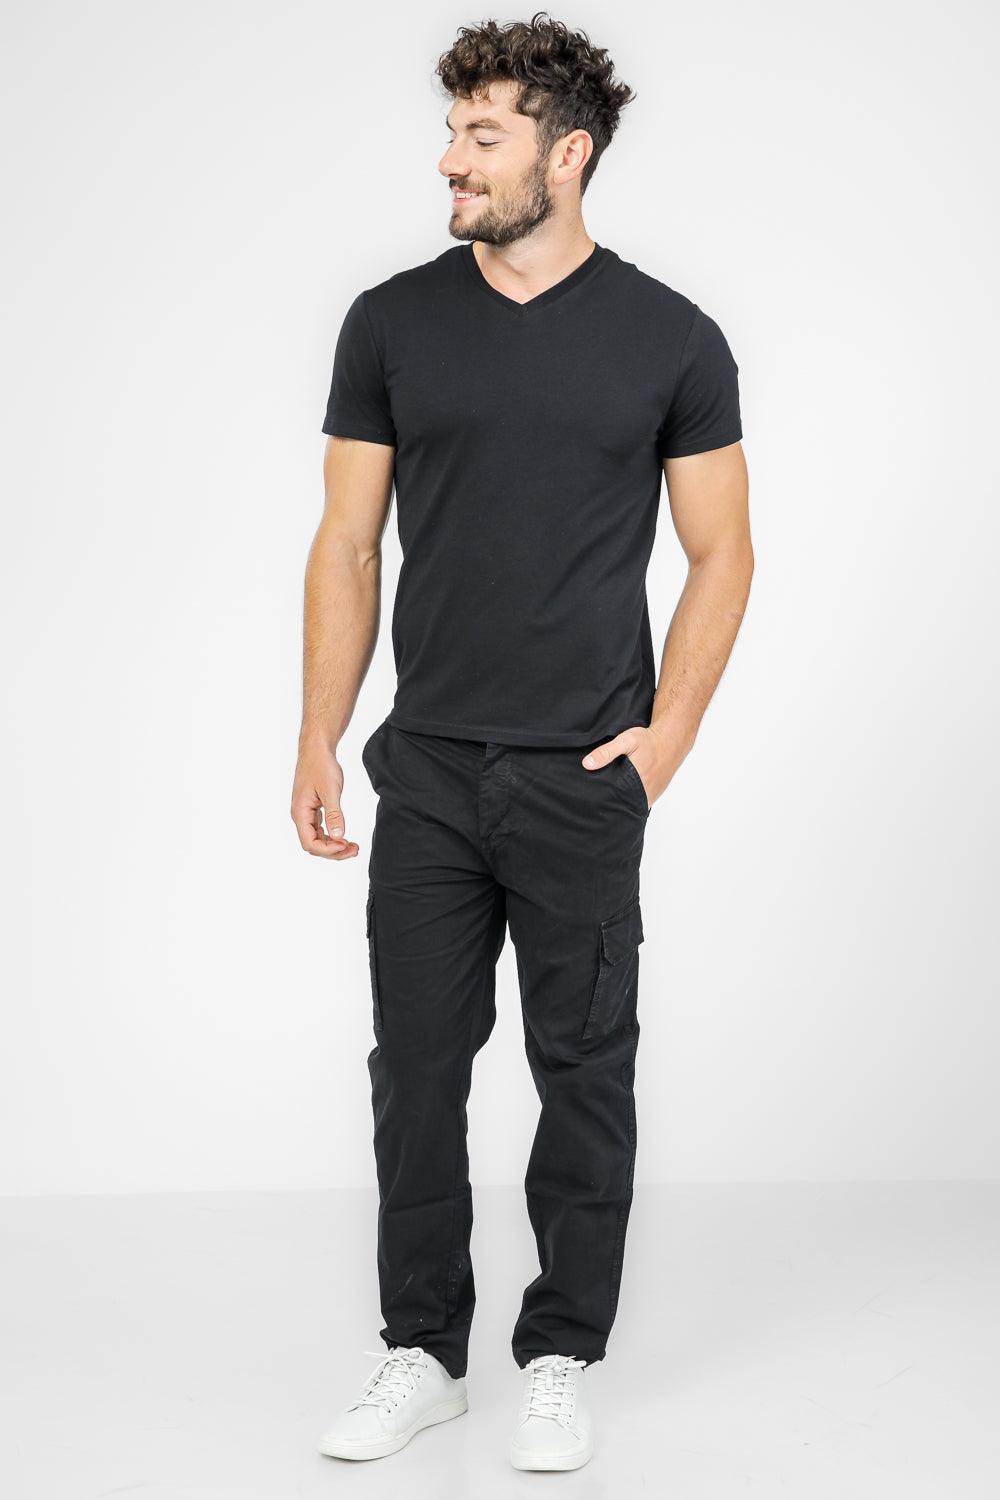 SCORCHER - מכנסי דגמ"ח CLASSIC בצבע שחור - MASHBIR//365